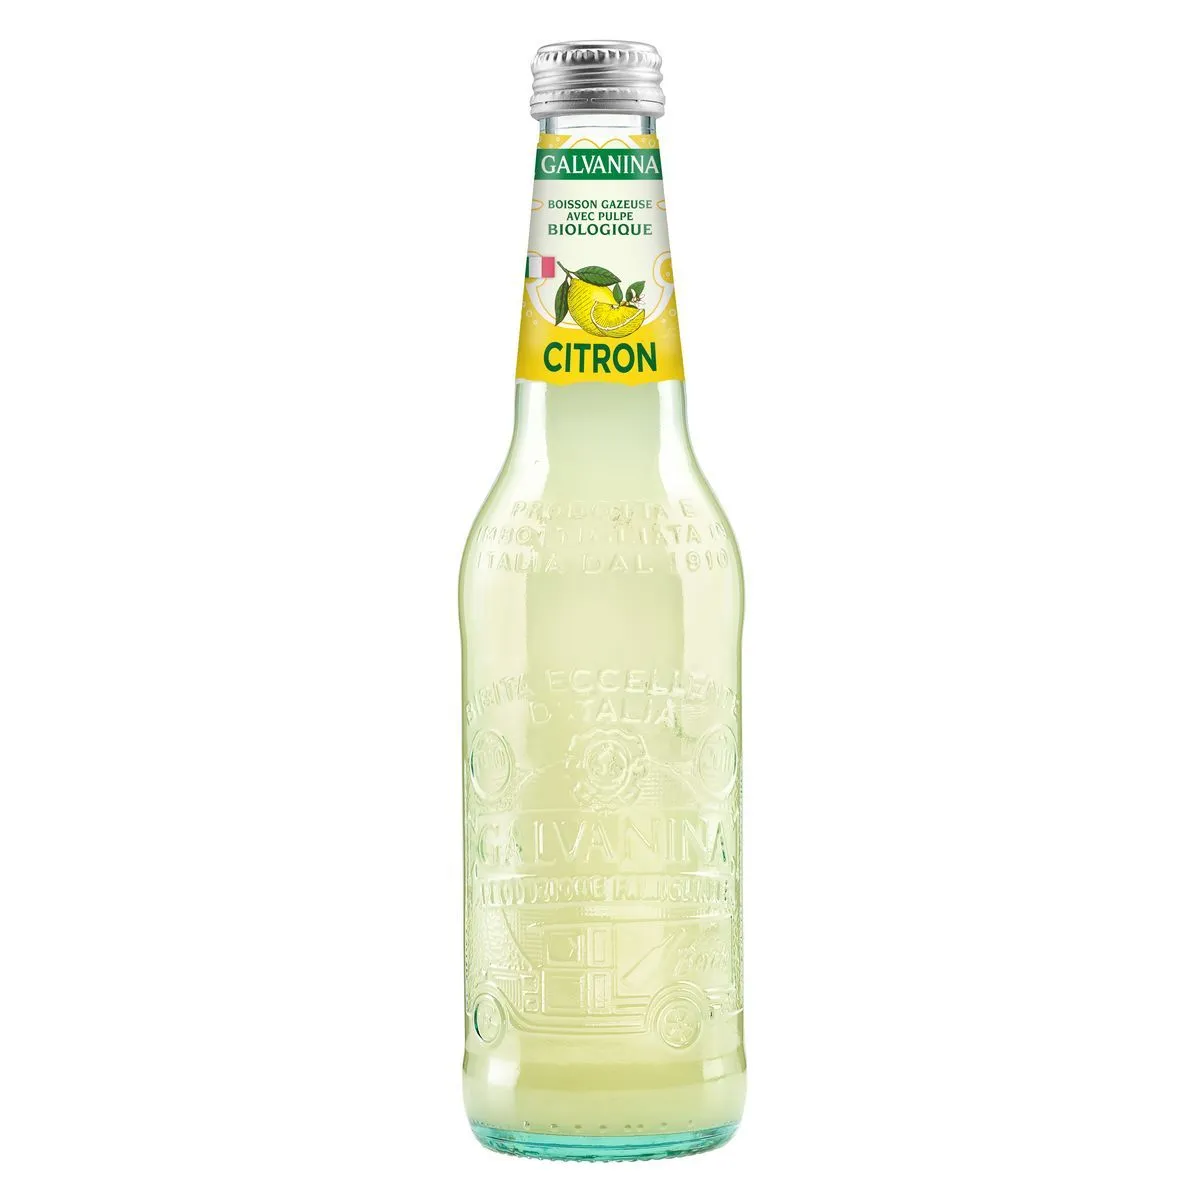 boisson gazeuse avec pulpe saveur citron bio galvanina